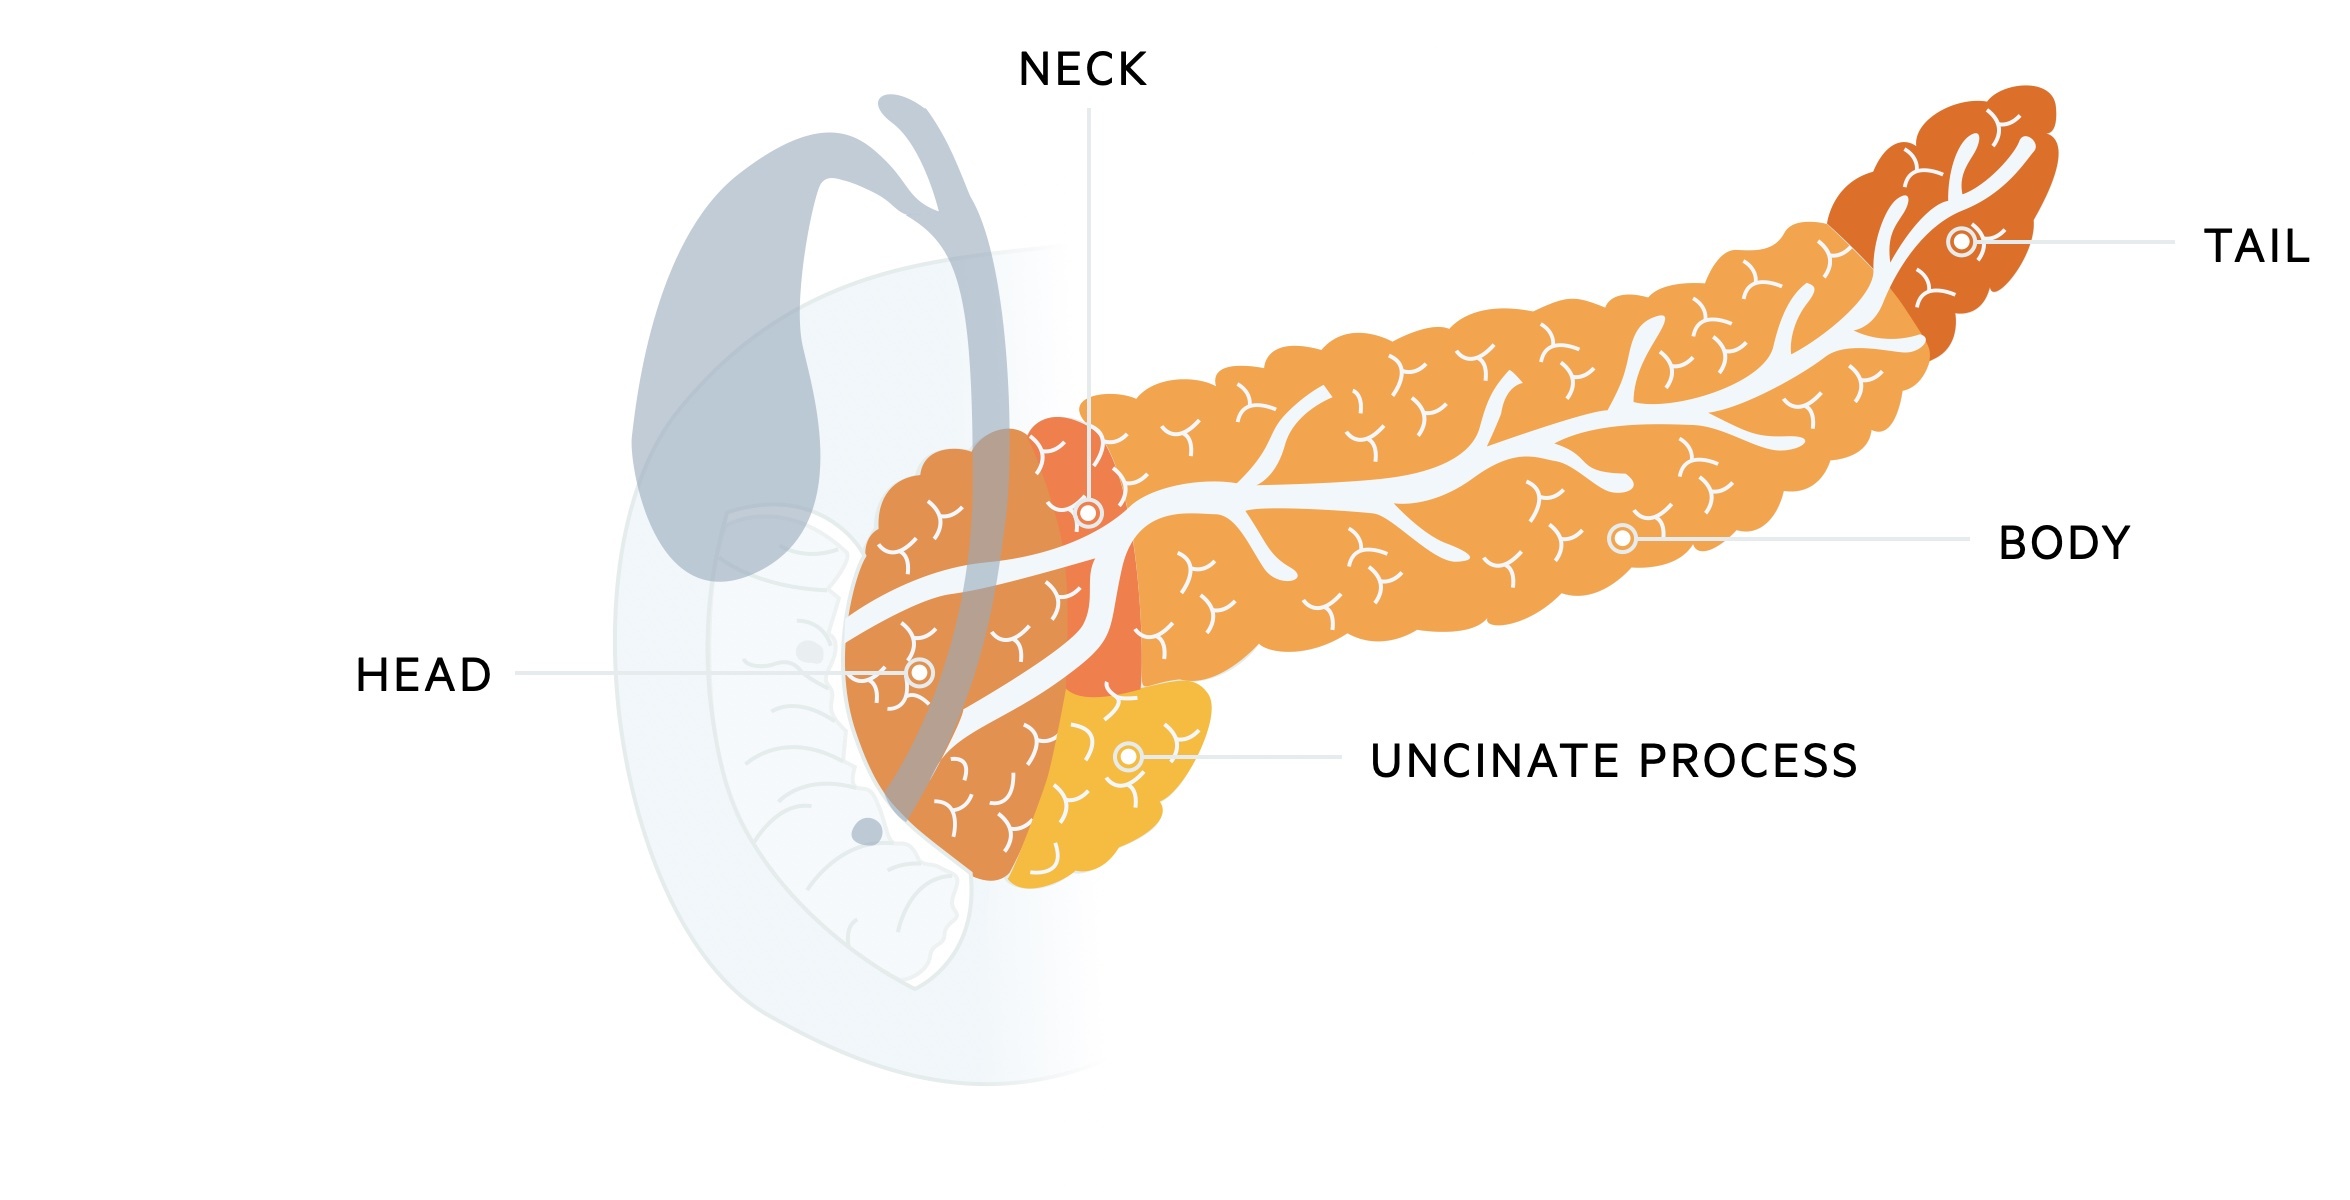 Parts of the pancreas